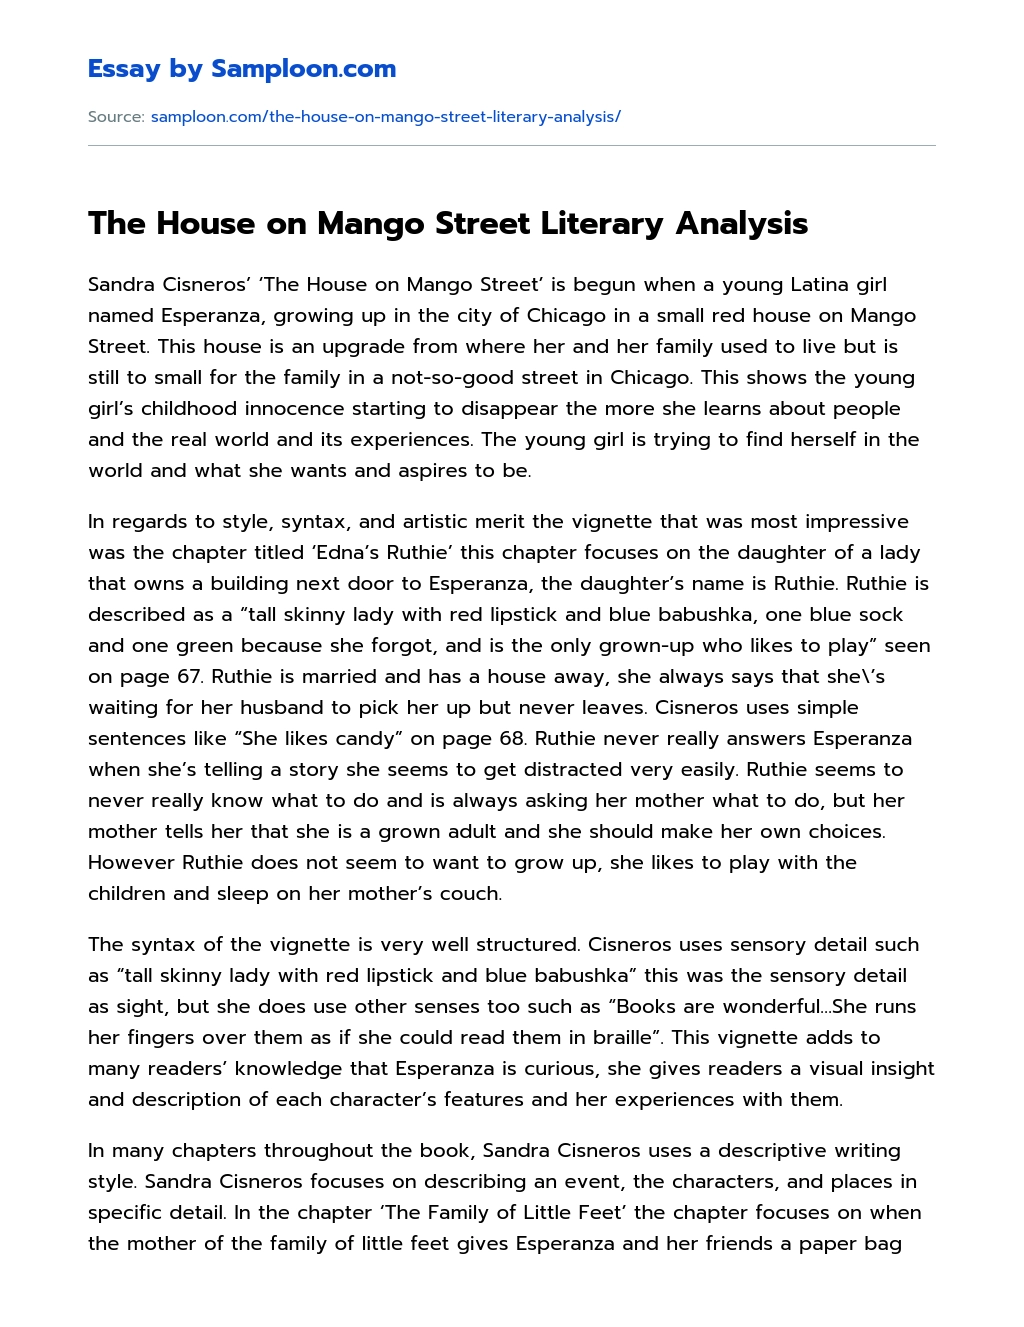 The House on Mango Street Literary Analysis essay